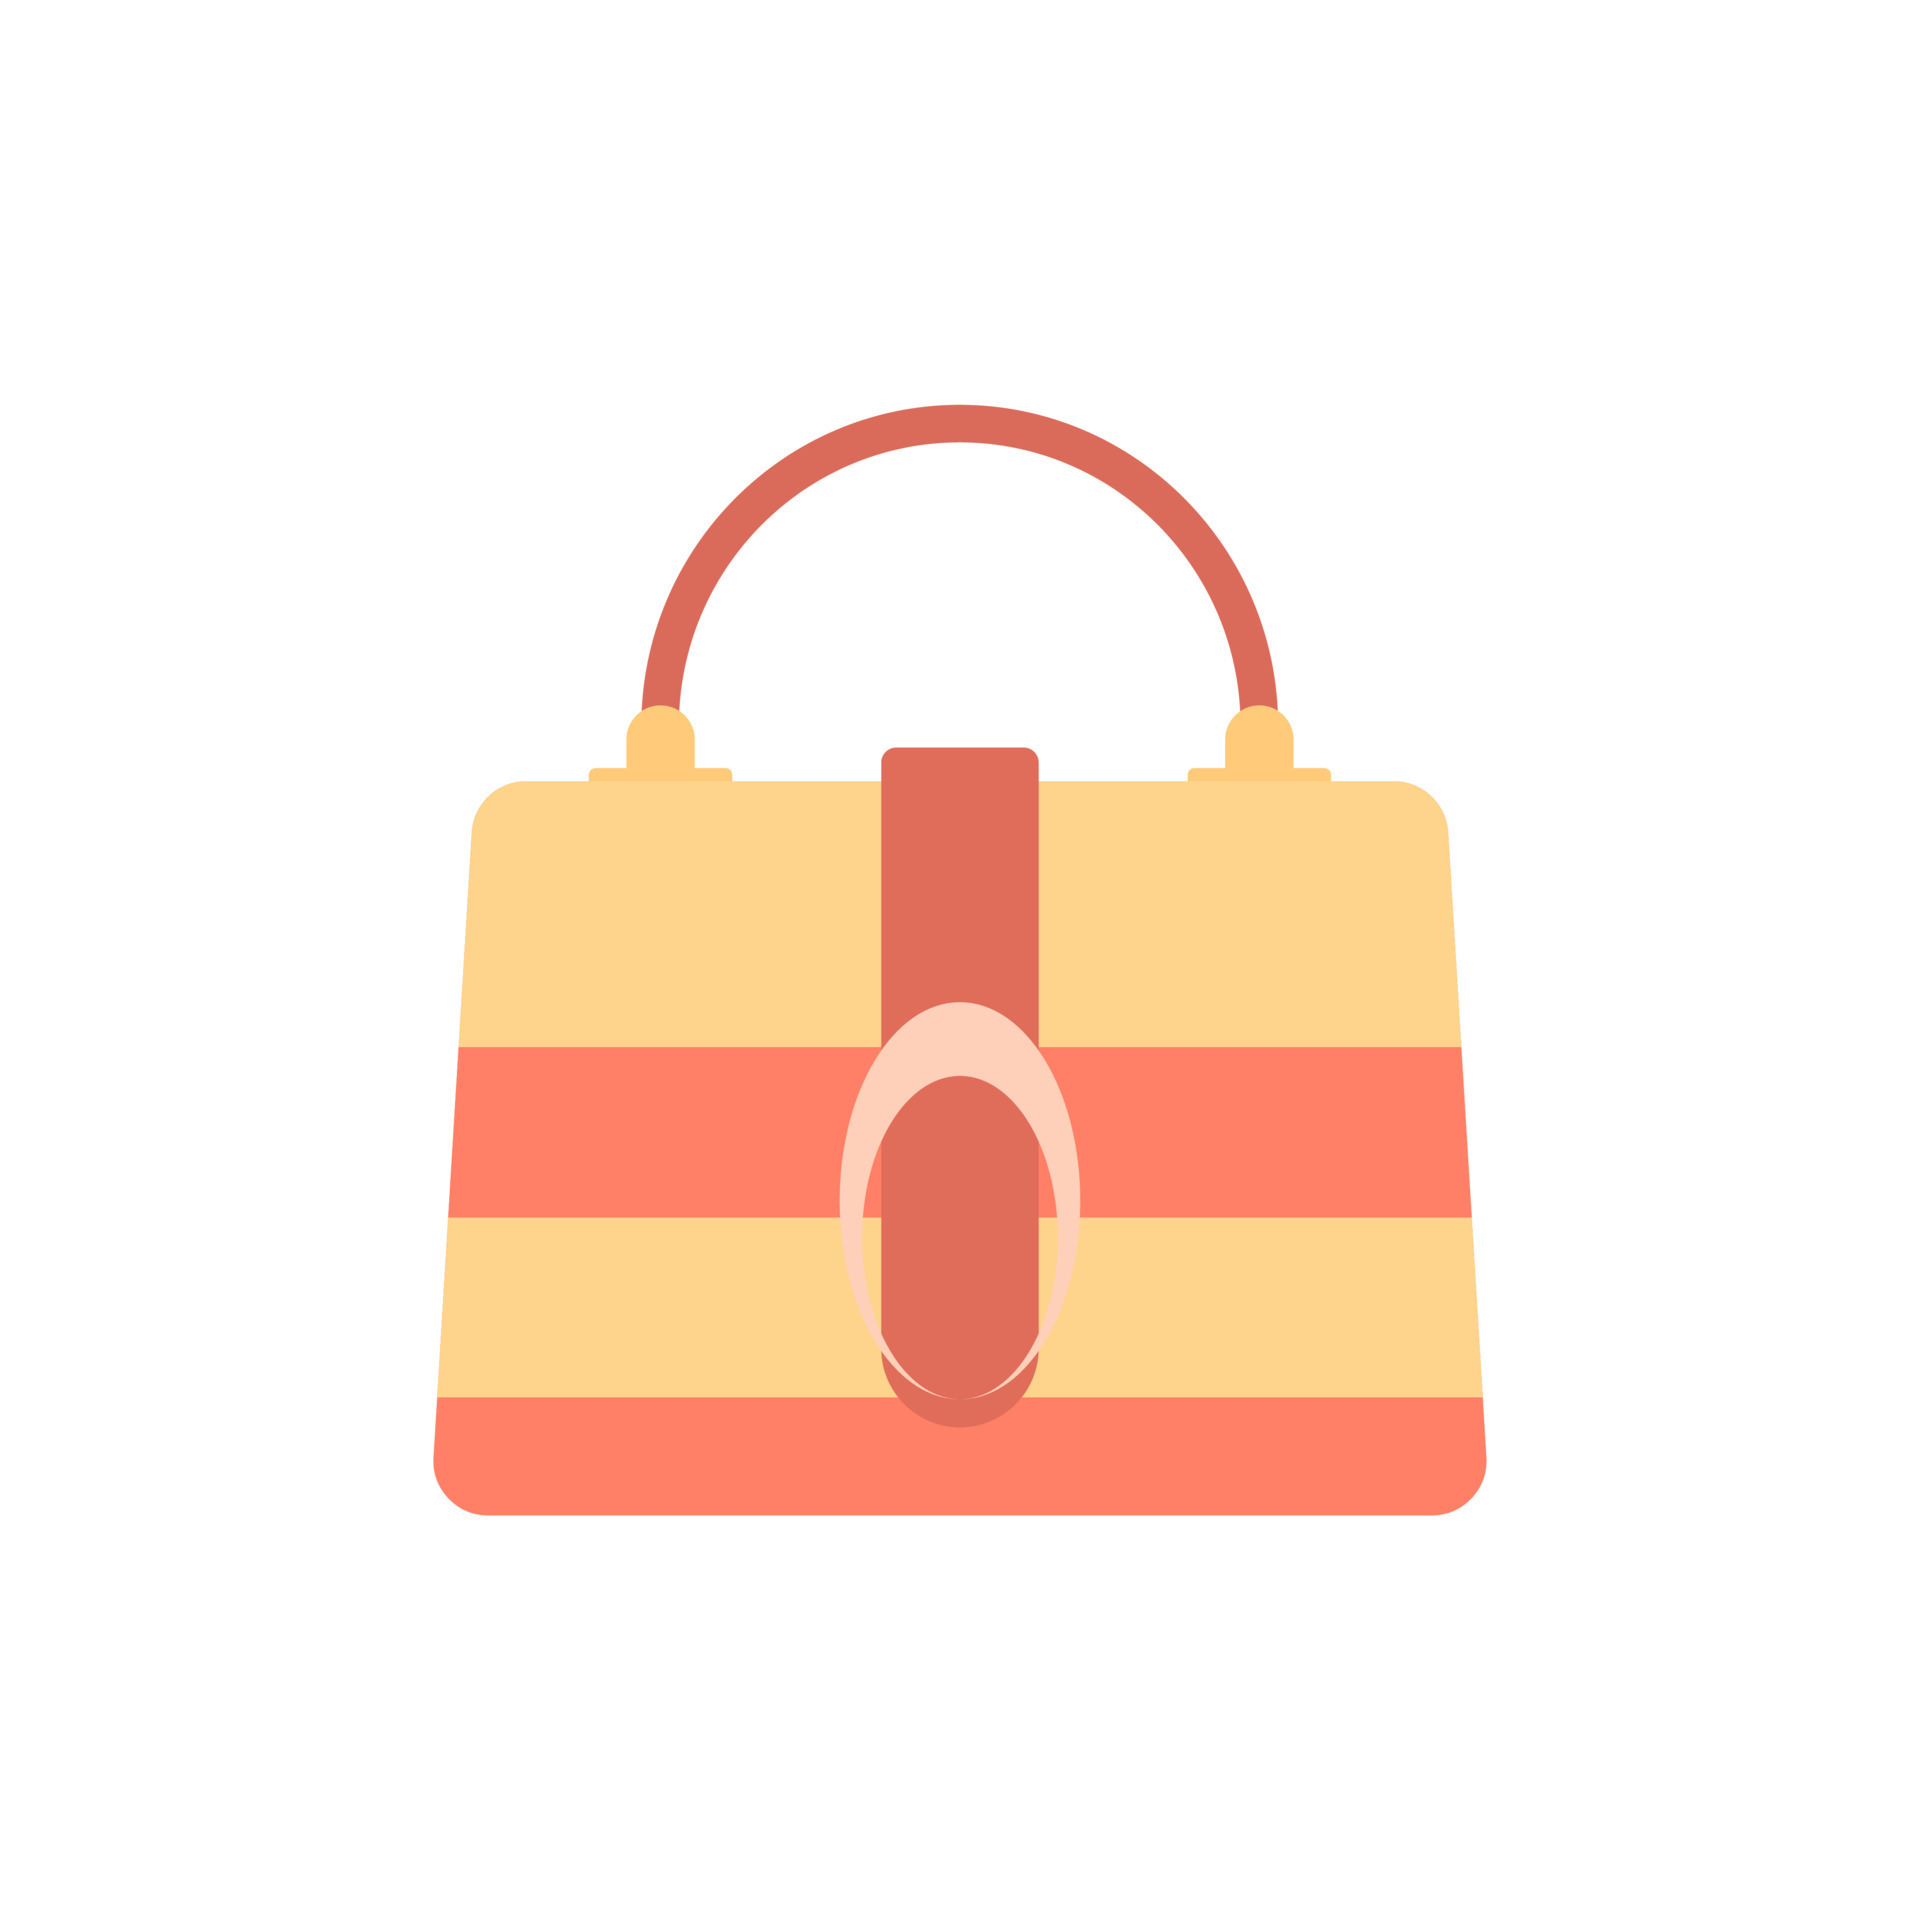 A Set Of Women's Handbags, A Women's Bag. Flat Design, Vector Illustration,  Vector. Royalty Free SVG, Cliparts, Vectors, and Stock Illustration. Image  77928316.